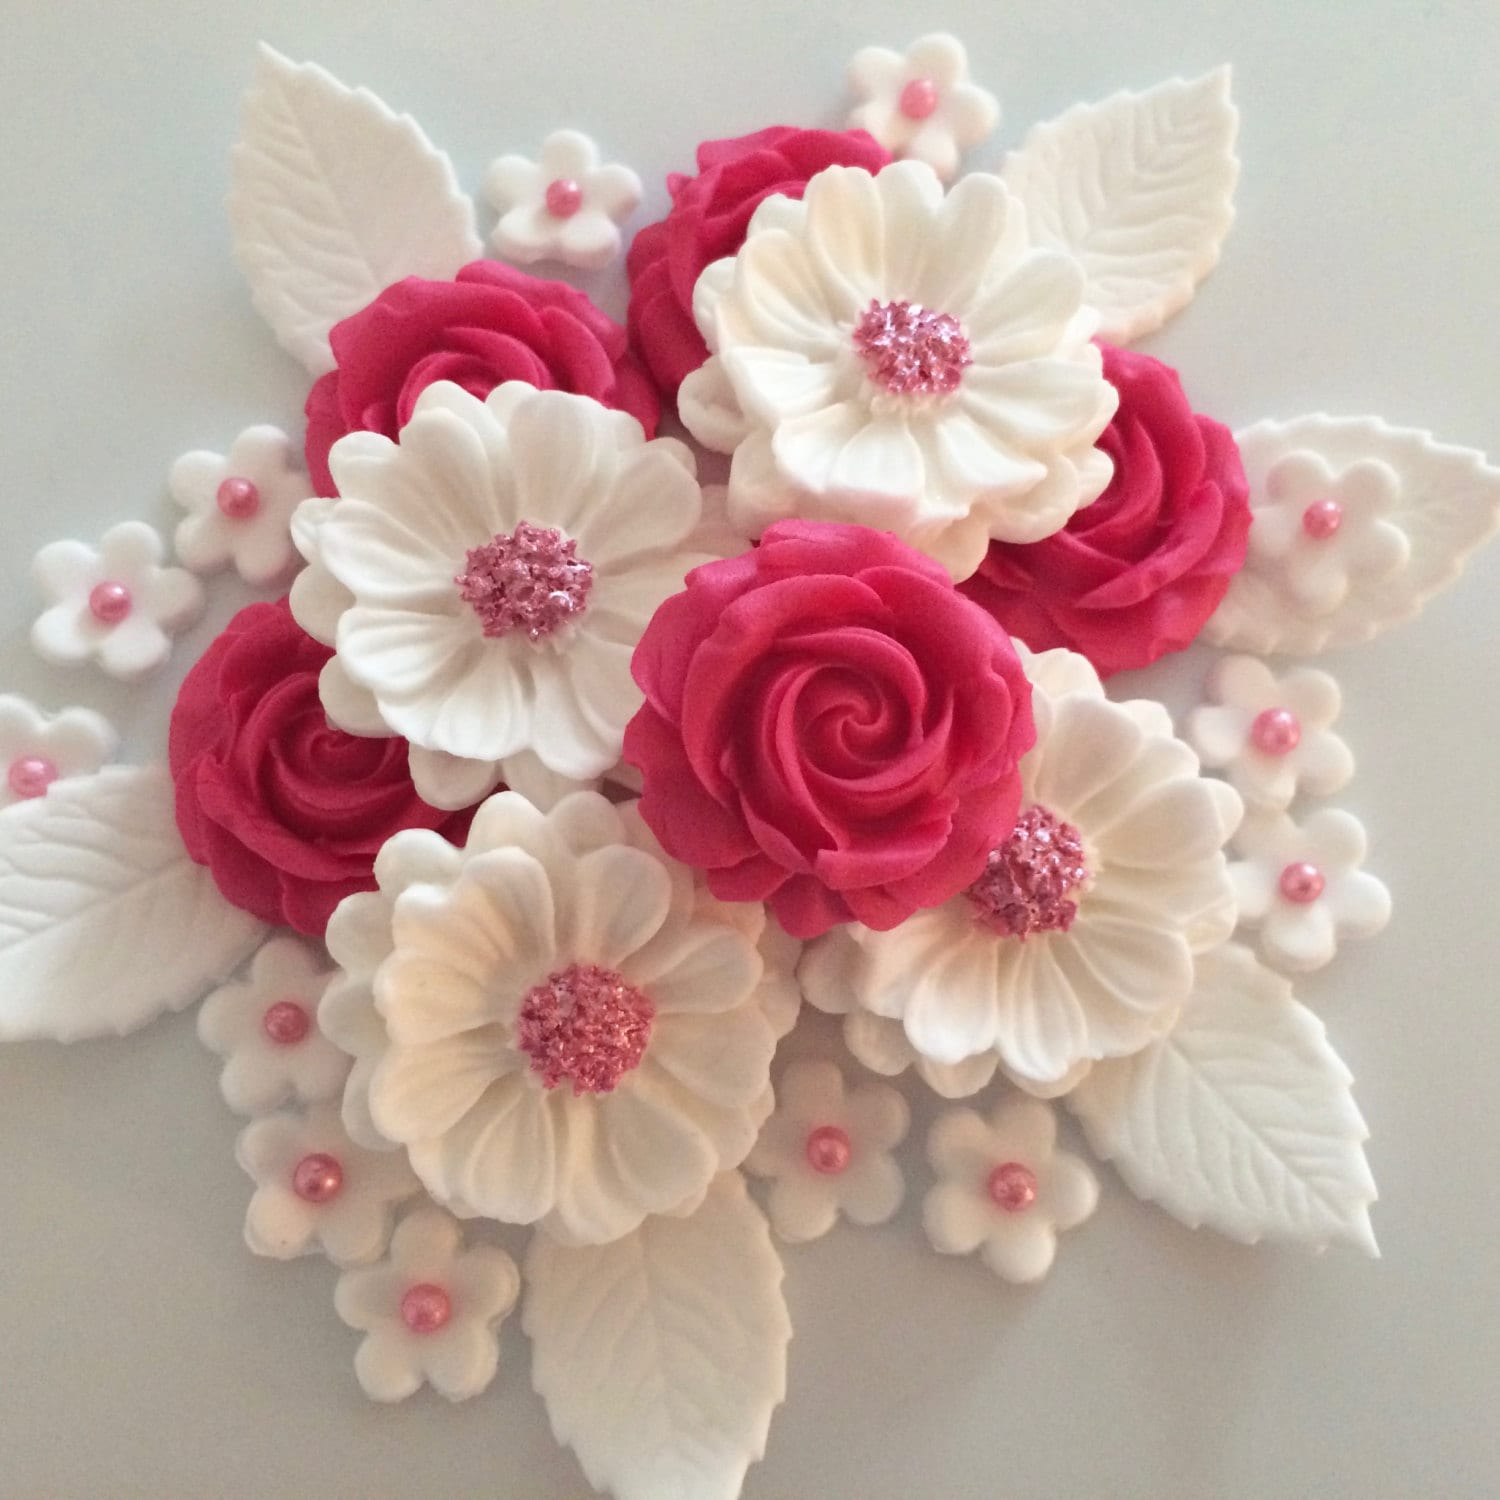 PINK ROSE BOUQUET Edible Sugar Paste Flowers Cake Decorations